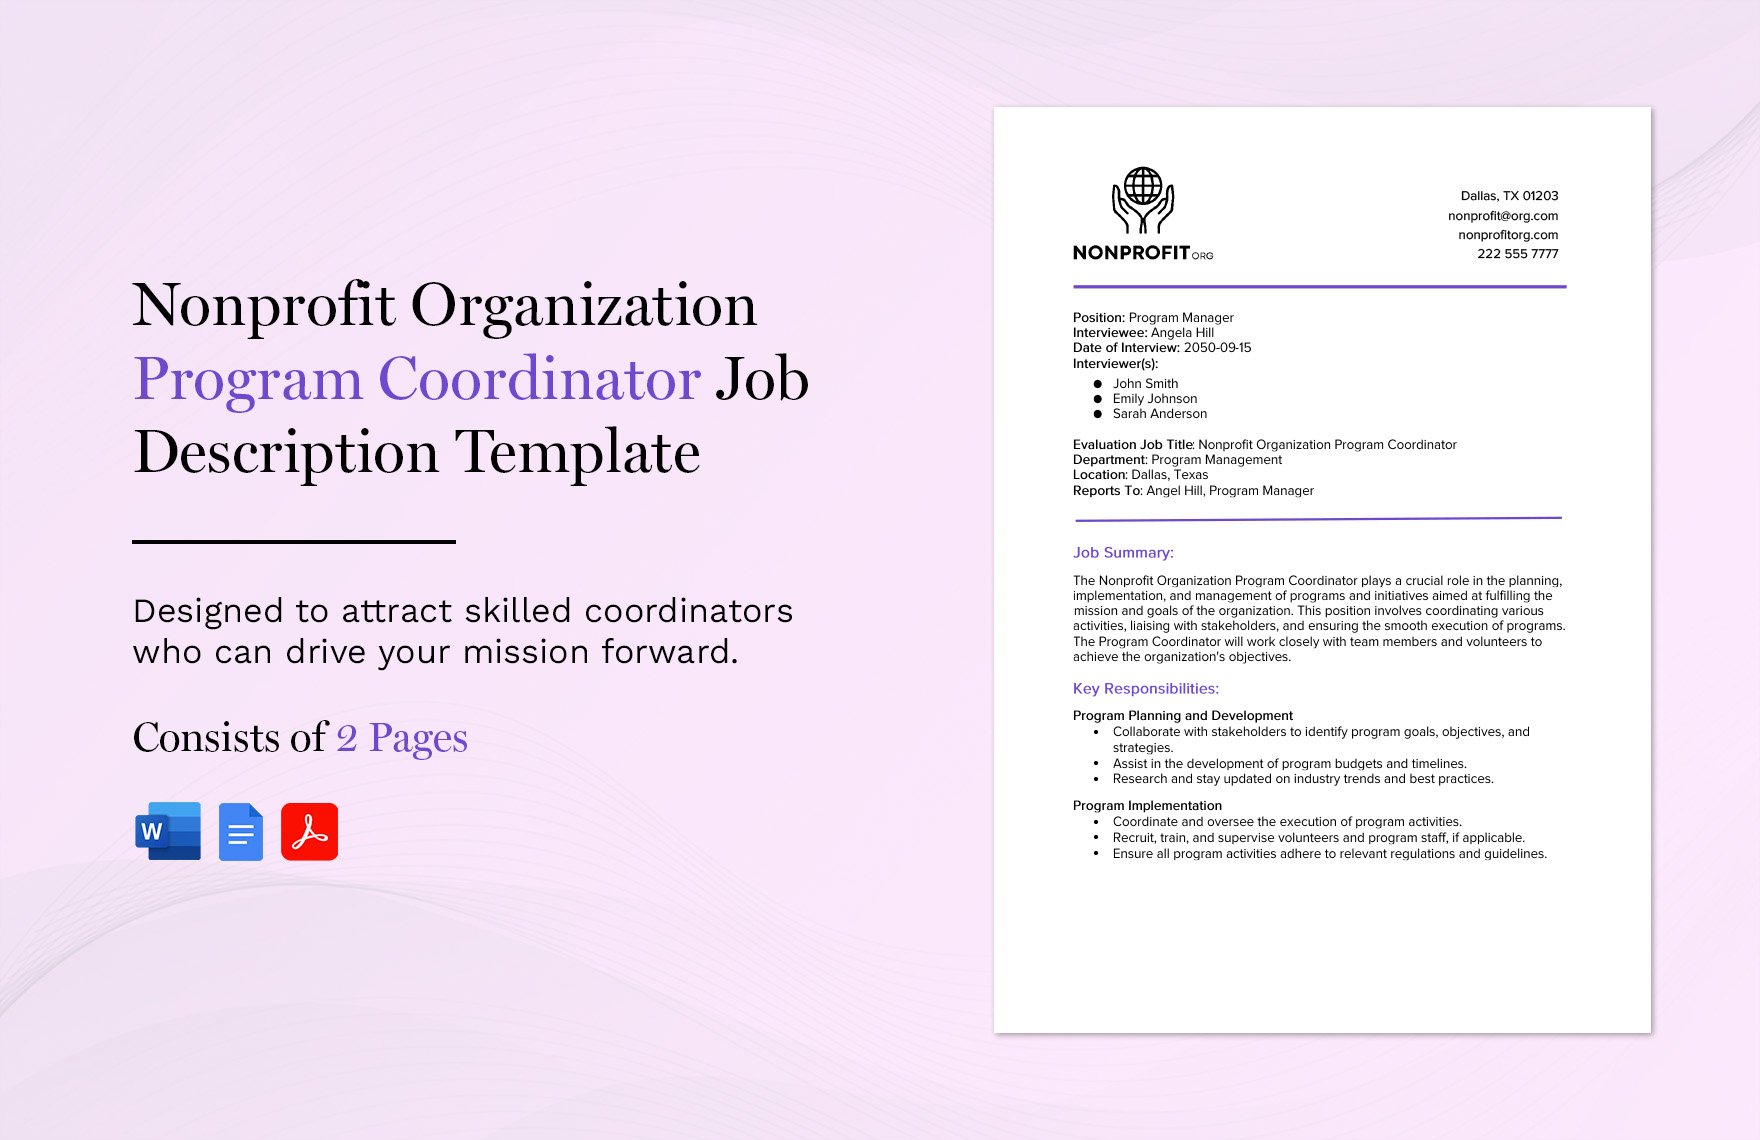 Nonprofit Organization Program Coordinator Job Description Template